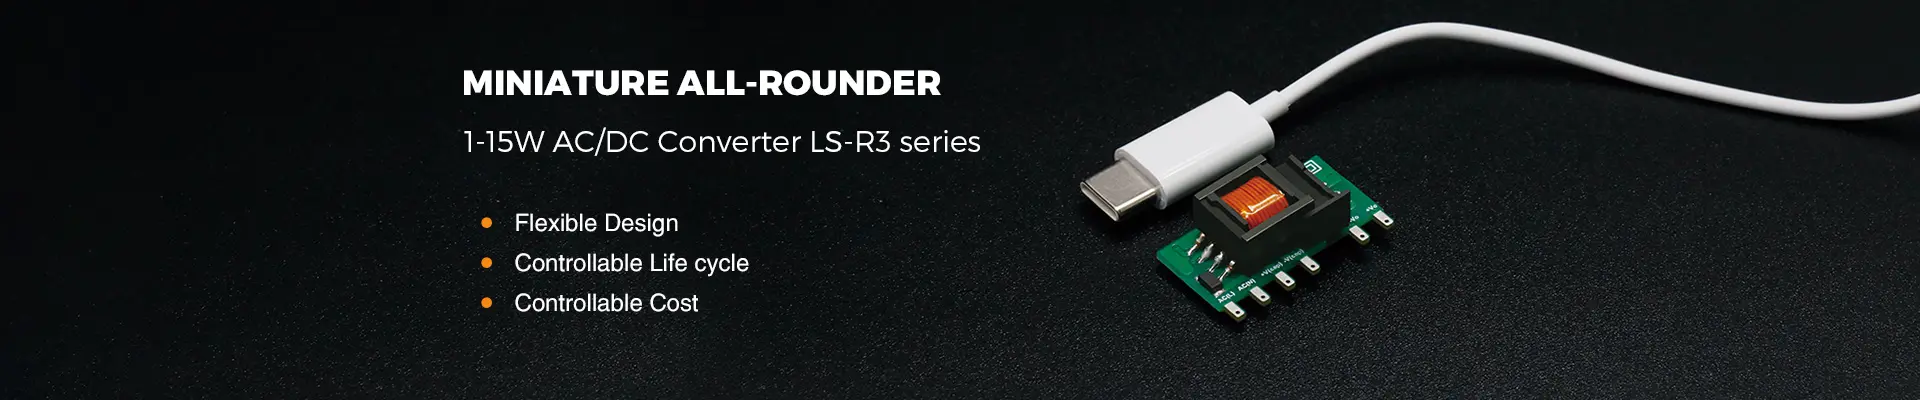 Miniature All-rounder, 3-10W AC/DC Converter LS-R3 series